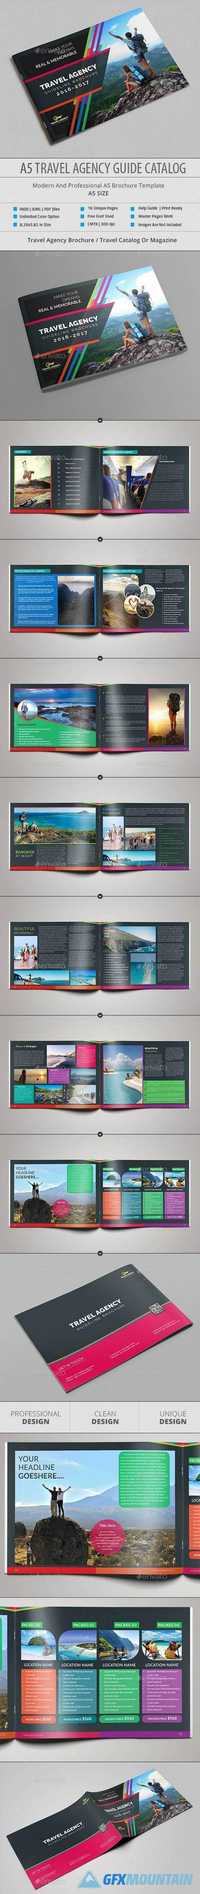 A5 Travel Agency Guide Catalog 20061854